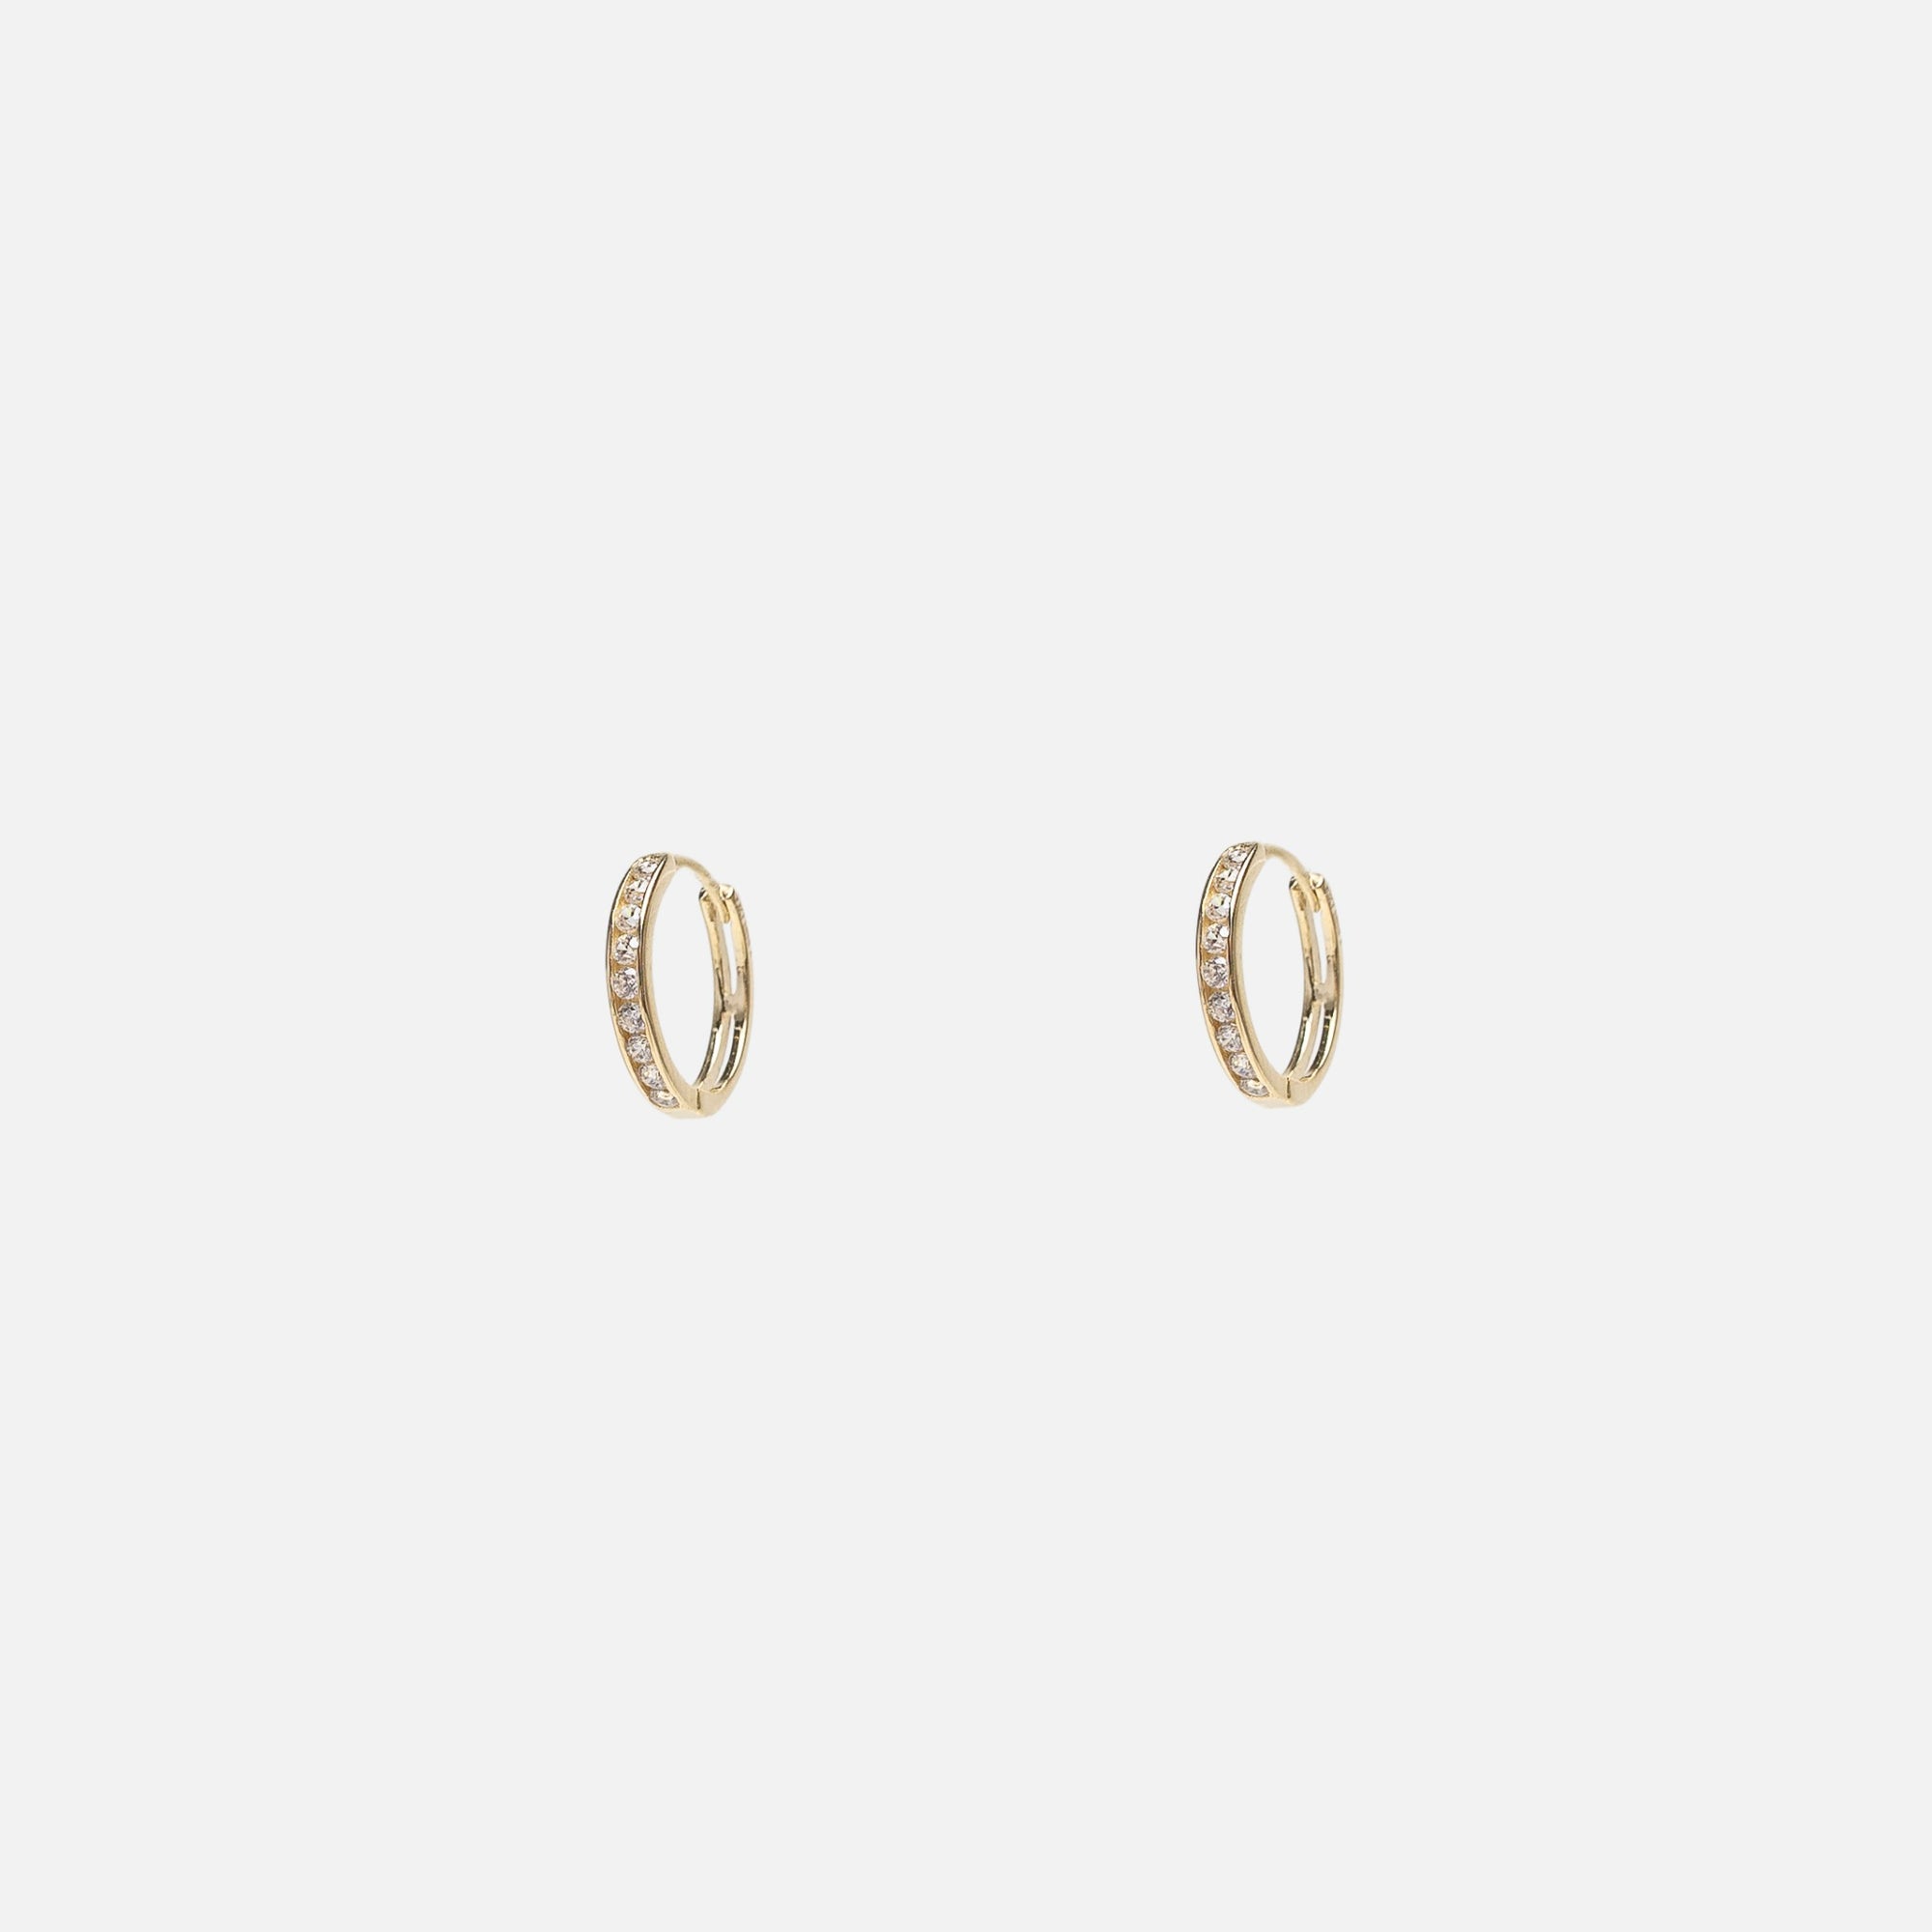 10k yellow gold 11mm hoop earrings with cubic zirconia